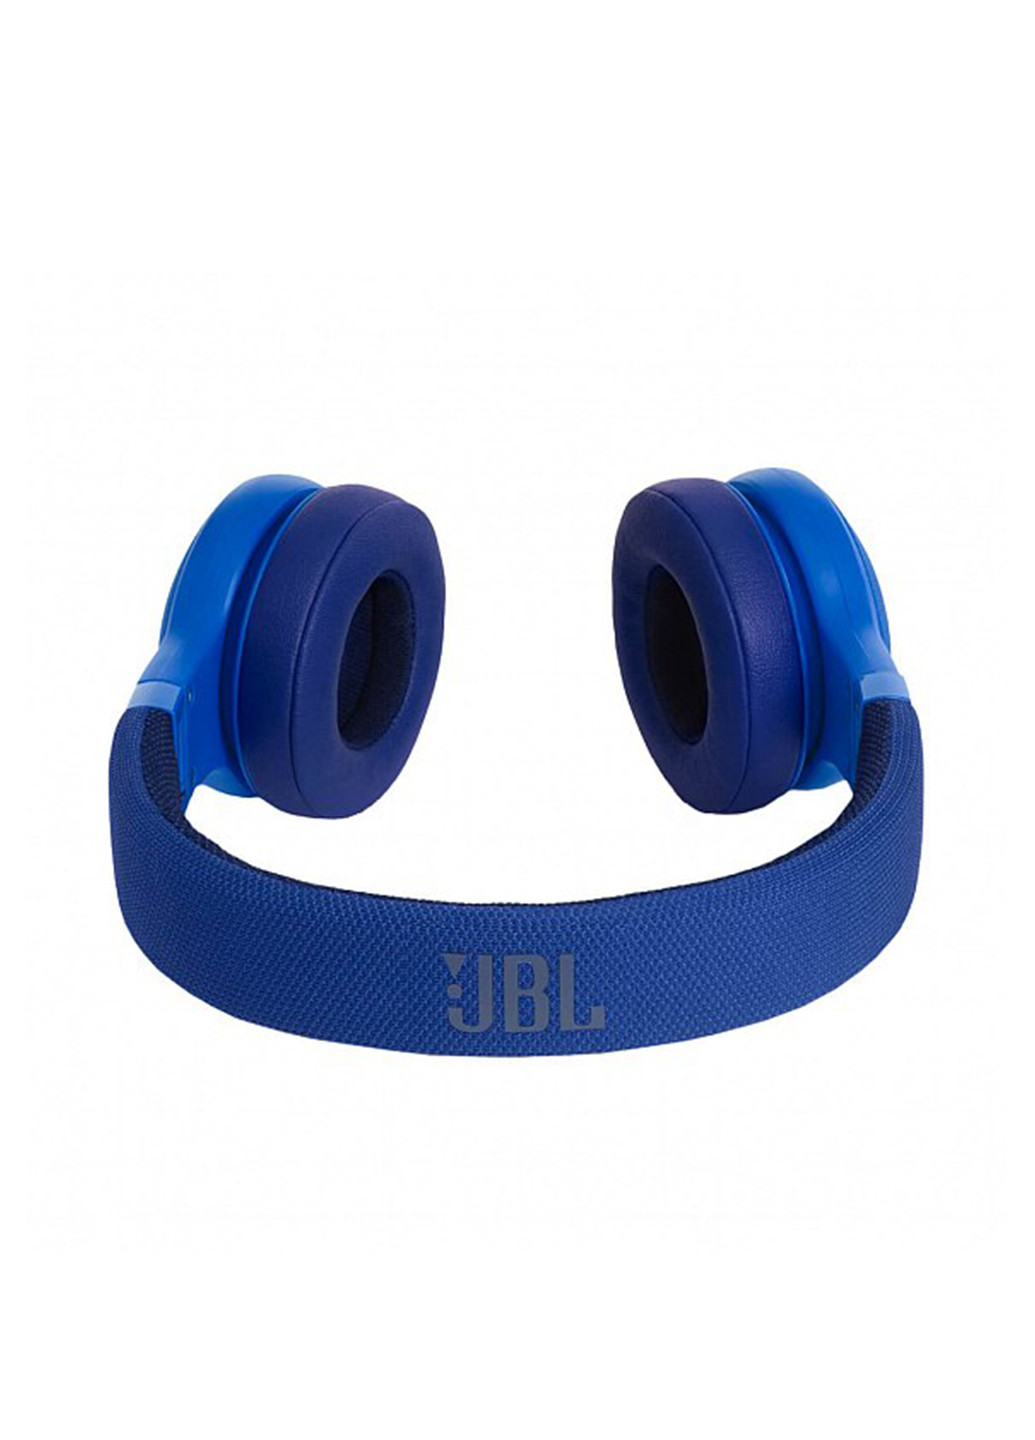 Наушники E45BT Blue (E45BTBLU) JBL jble45bt (131629236)